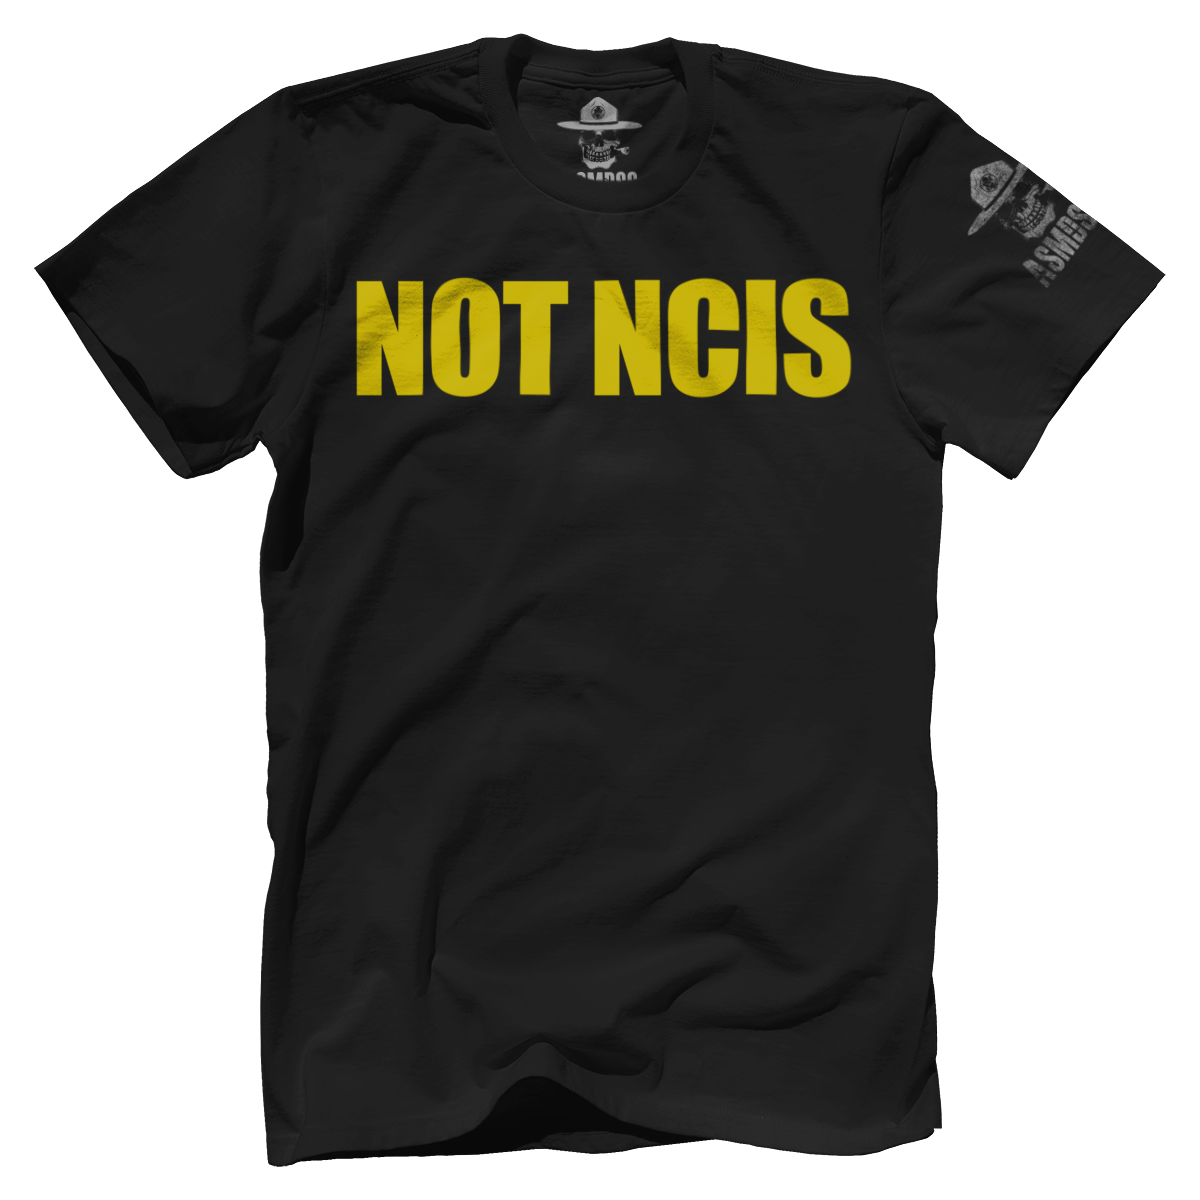 Not NCIS